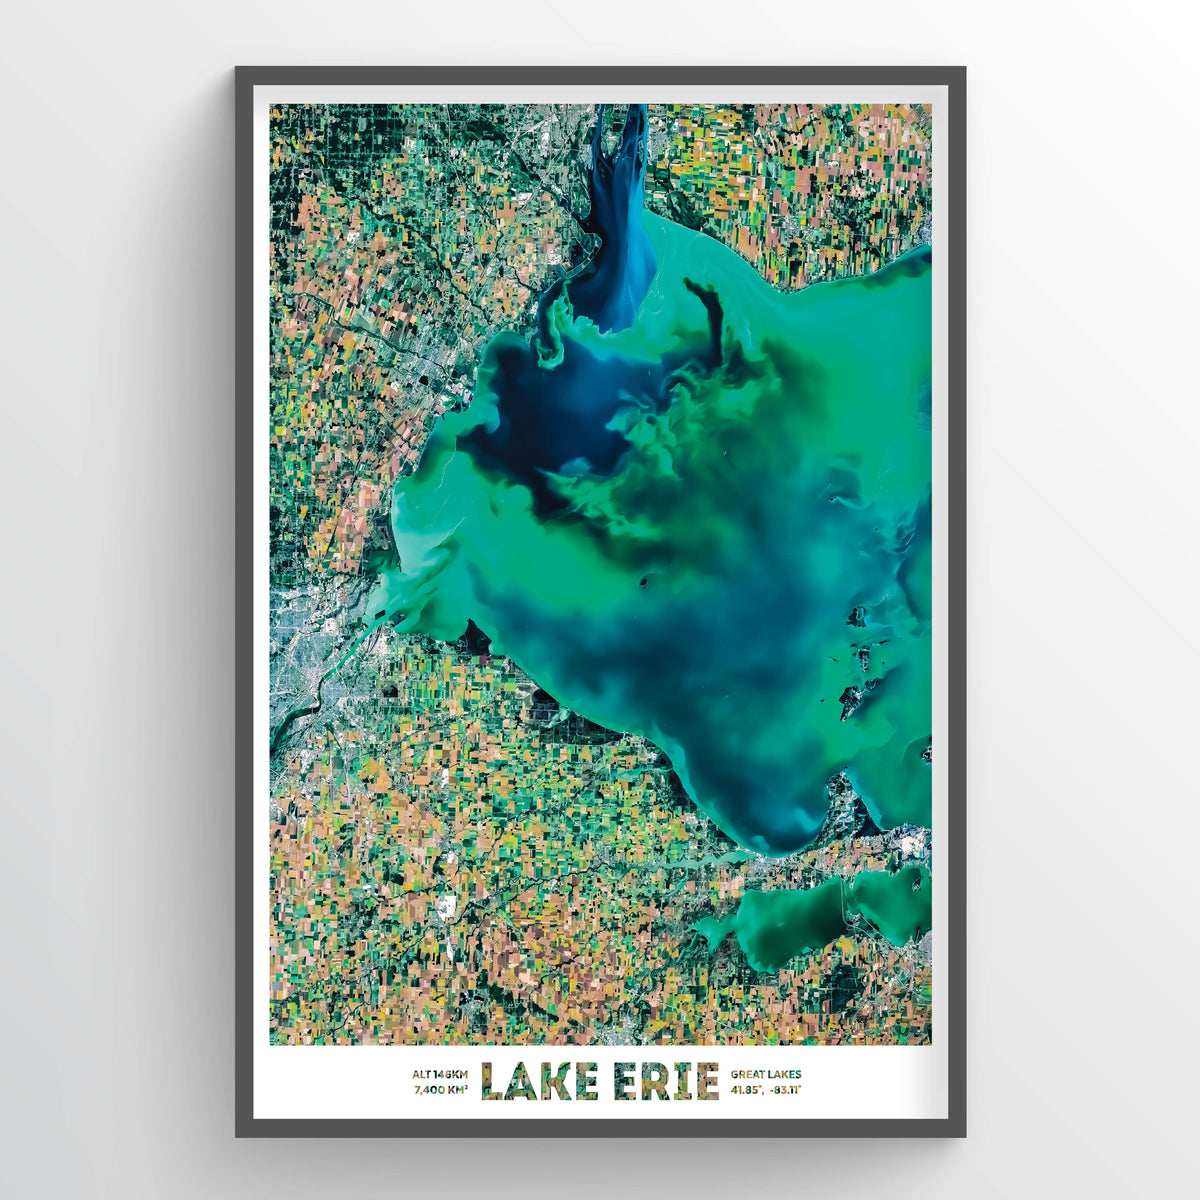 Lake Eyre - Fine Art